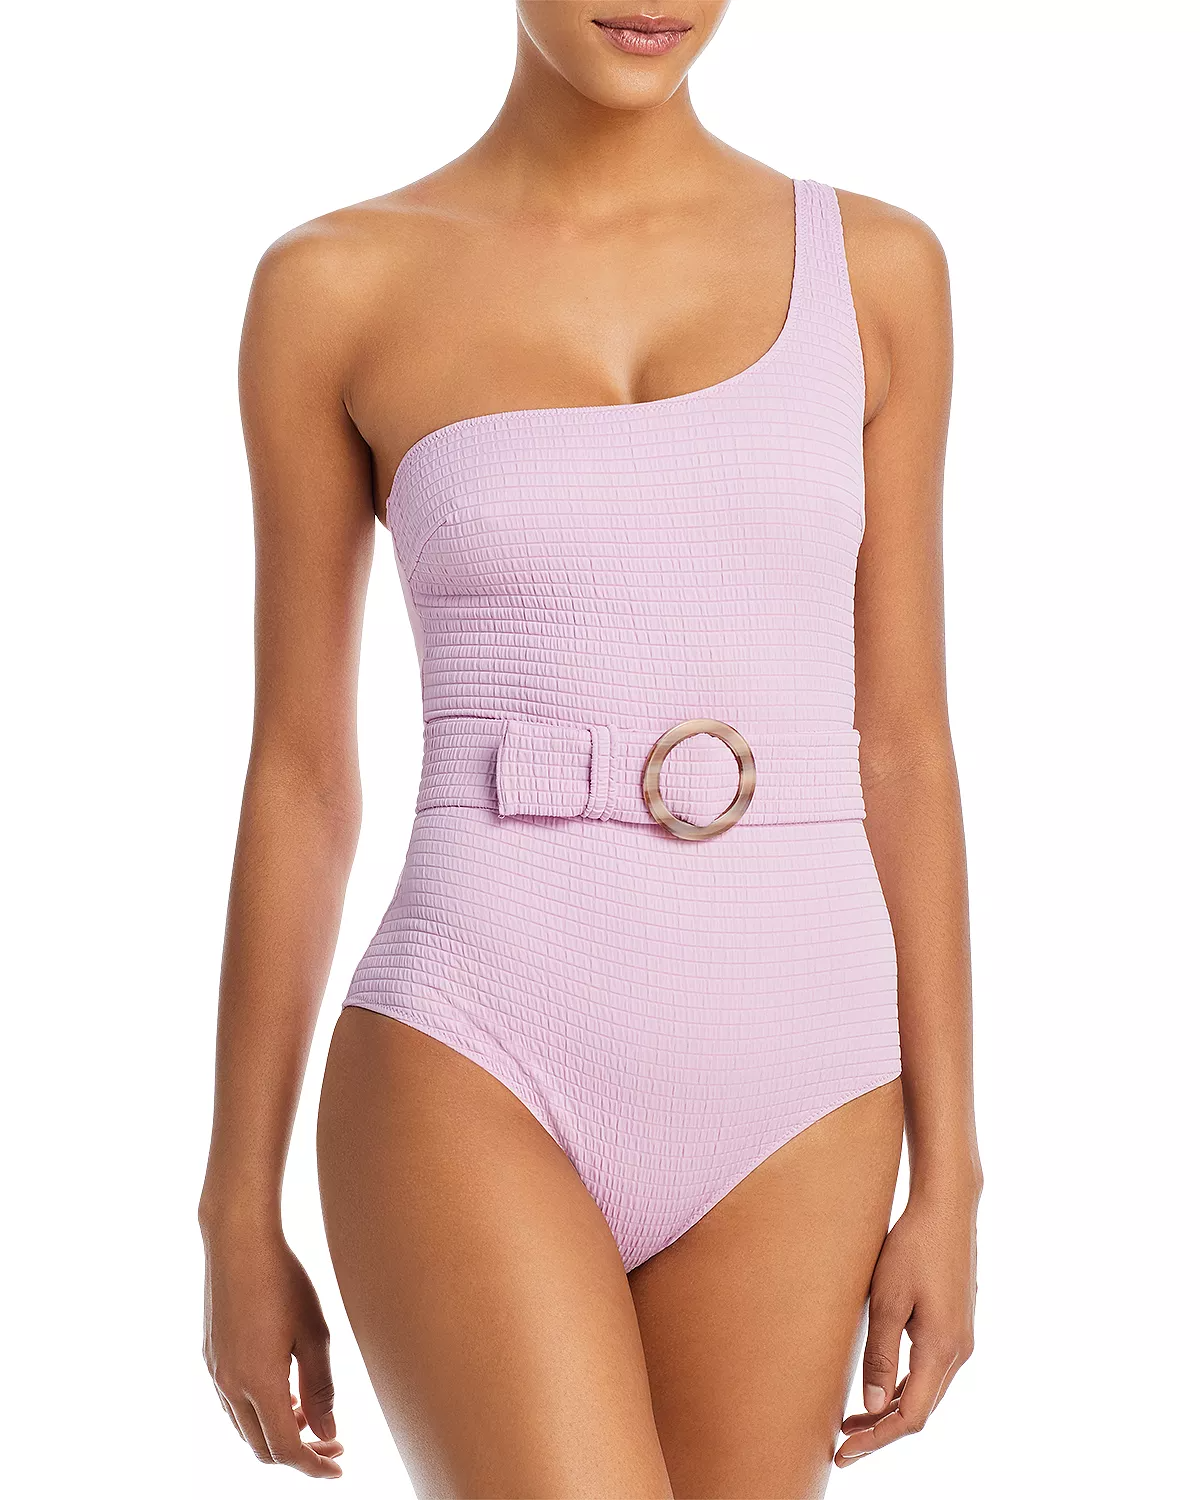 Rectangle Body Type Belt or Waist Detail Swimsuit